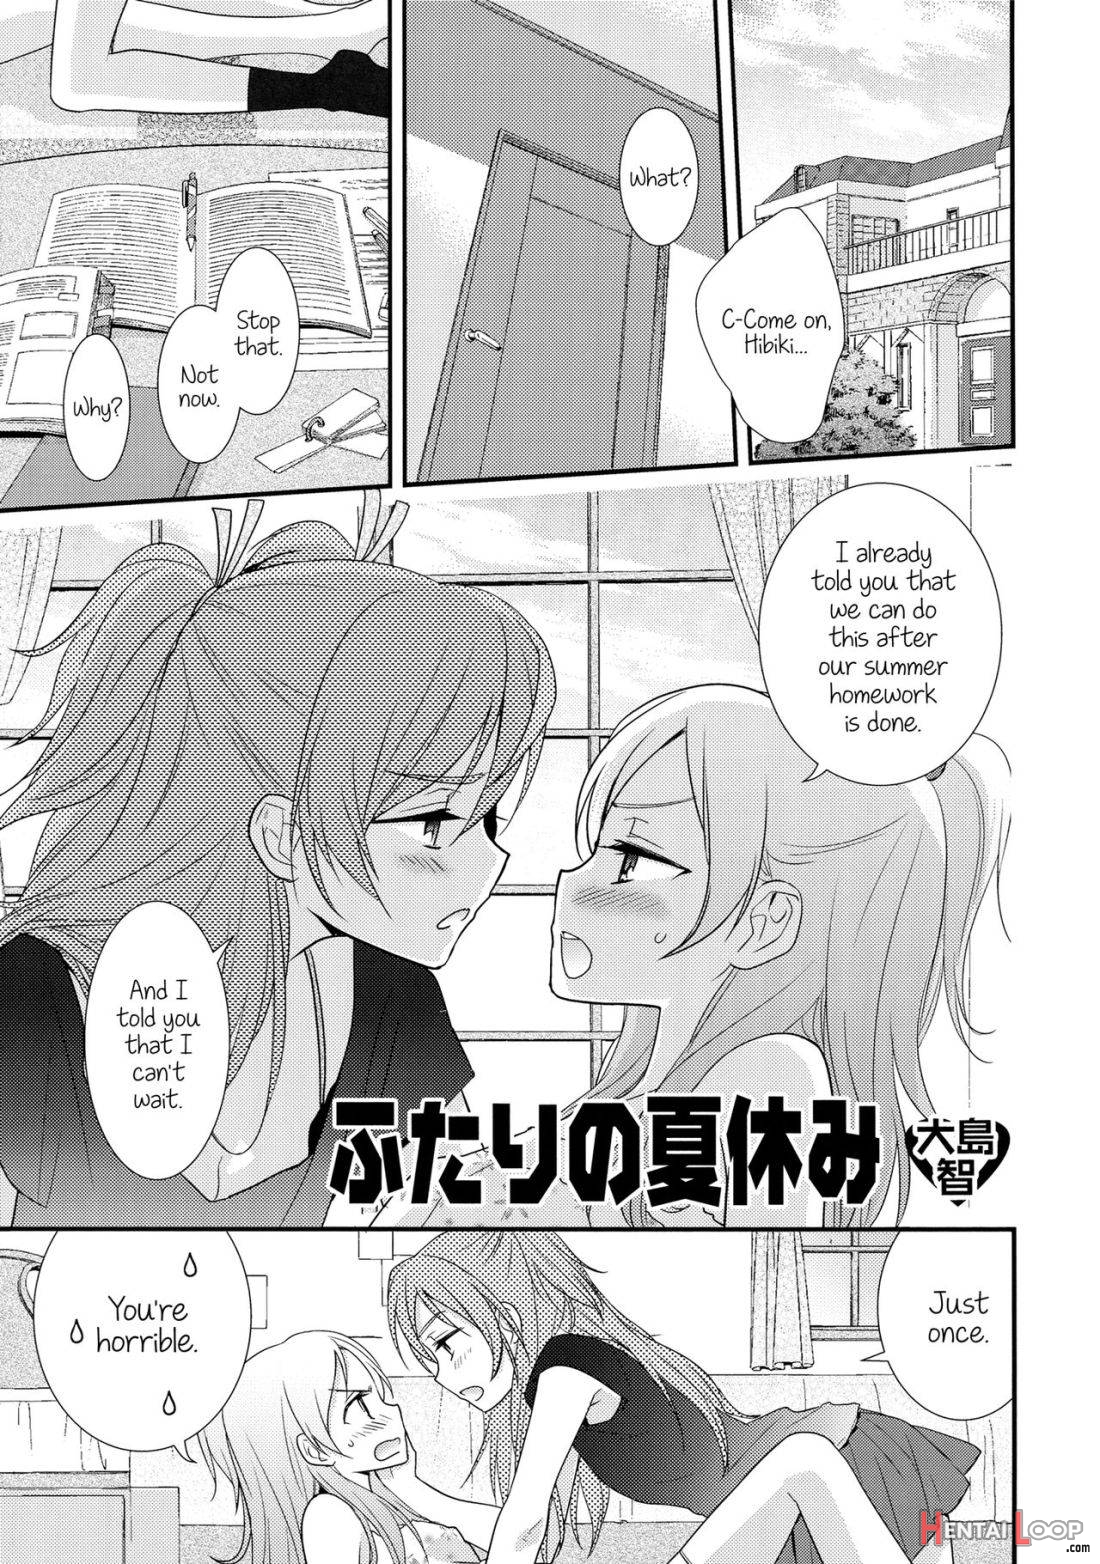 Yuri-cure!! page 2